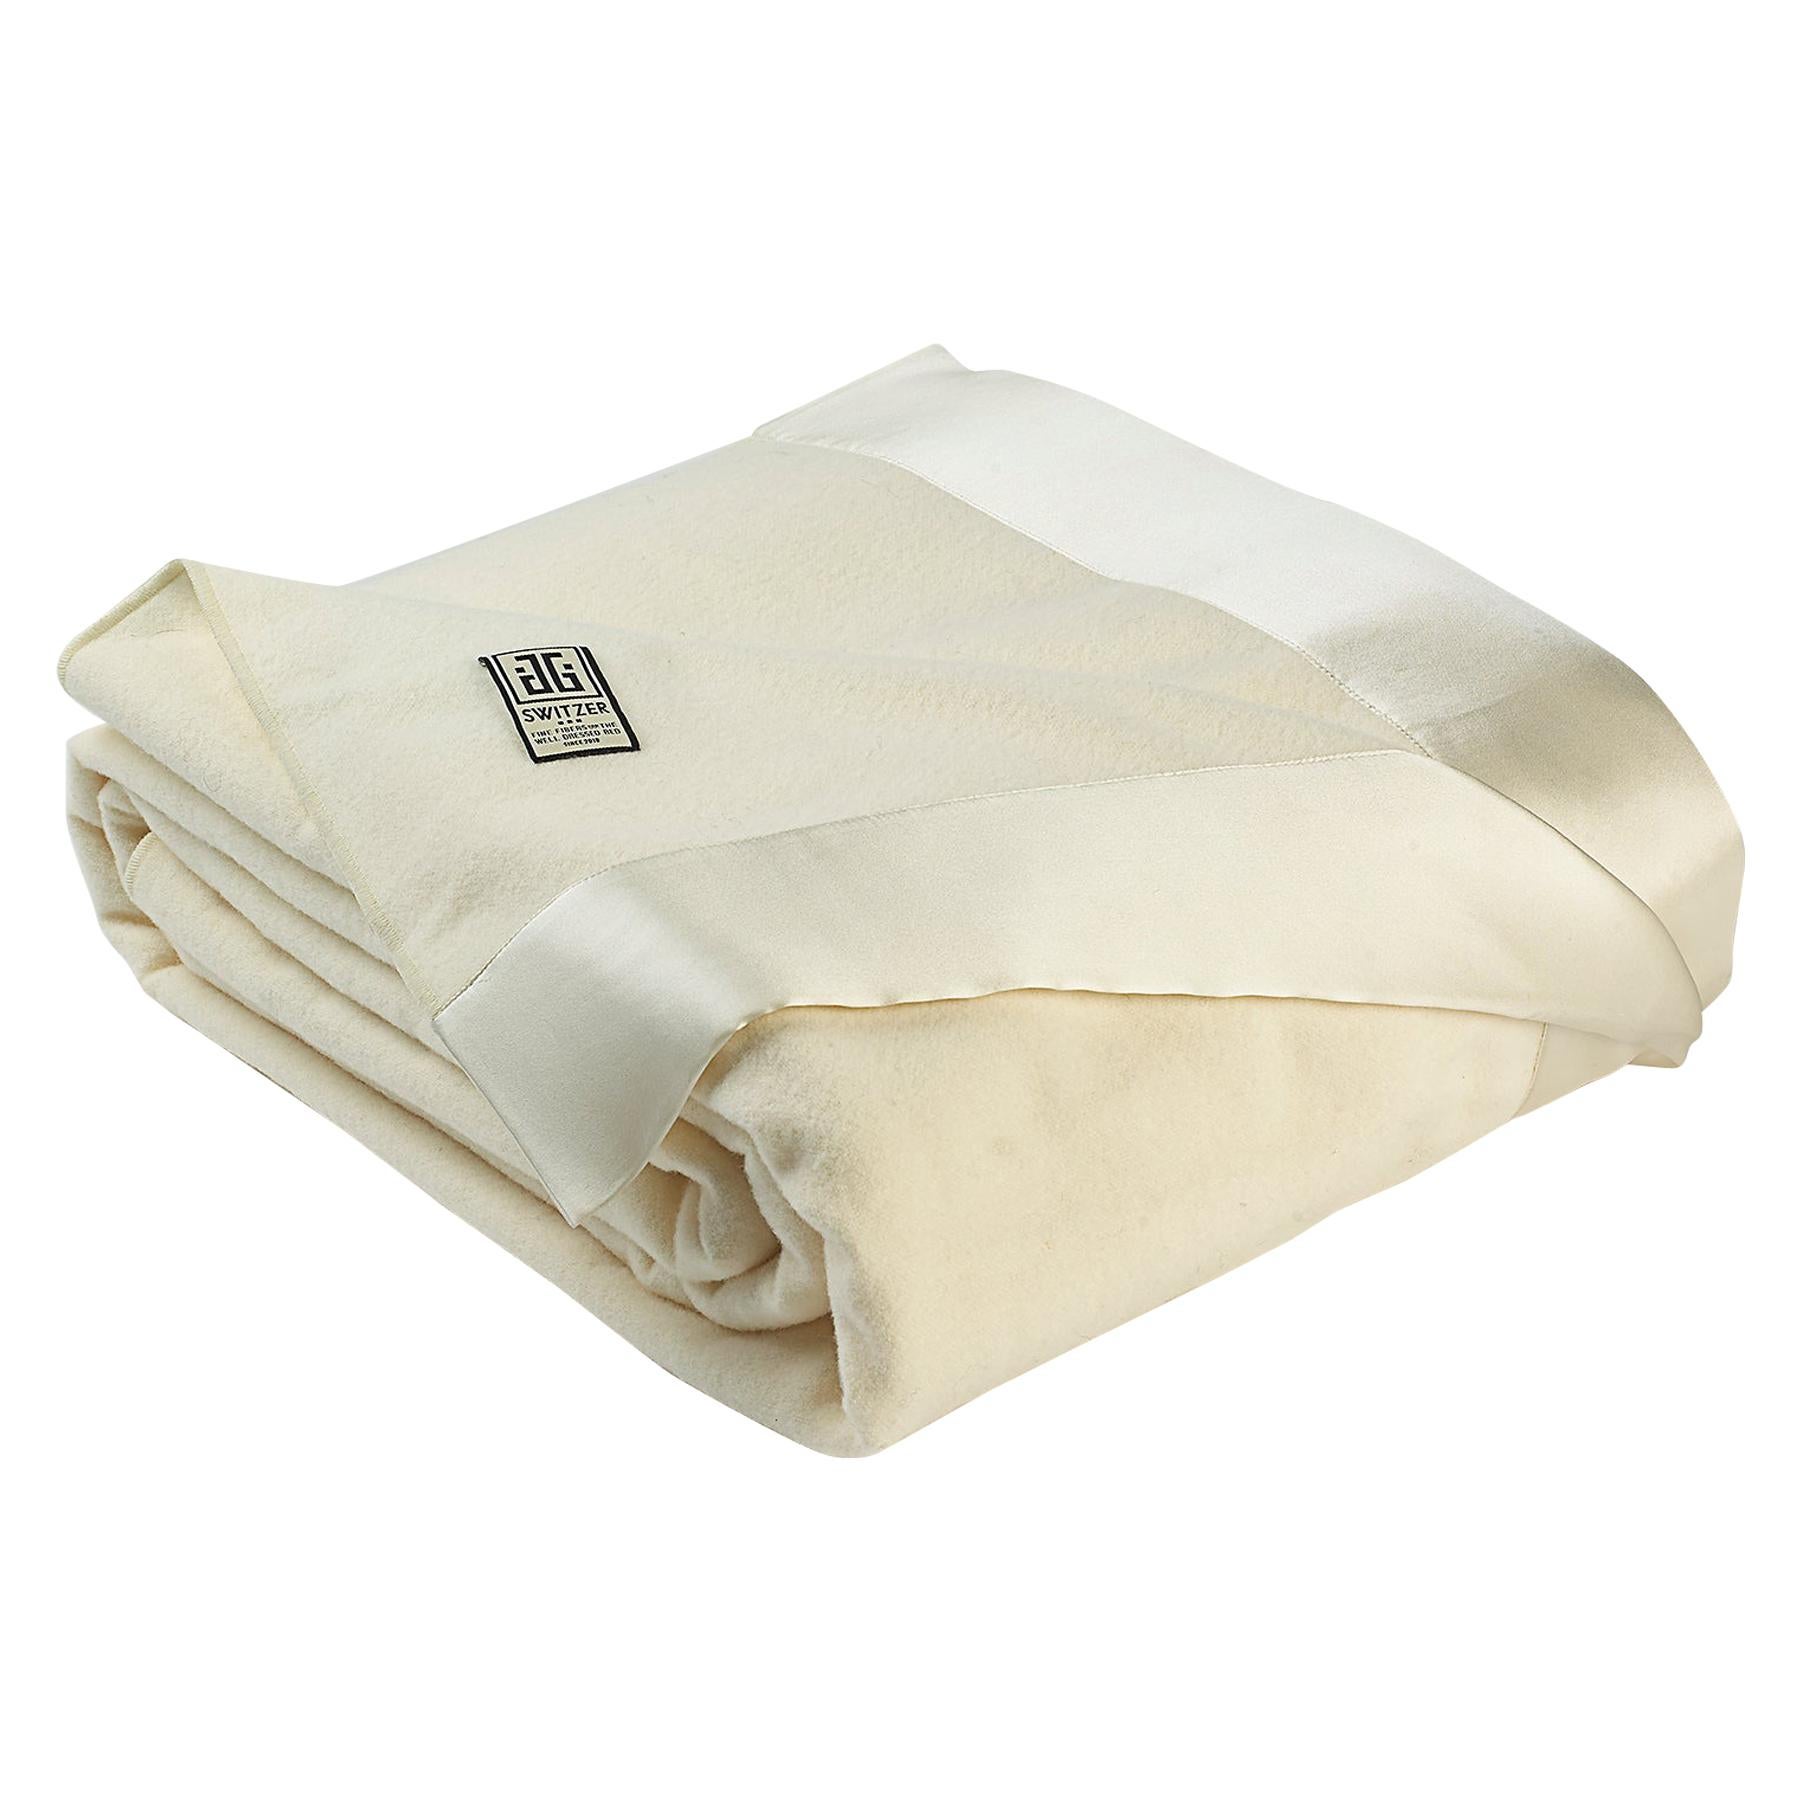 Henry Merino White King-Size Blanket with Silk Border by JG Switzer